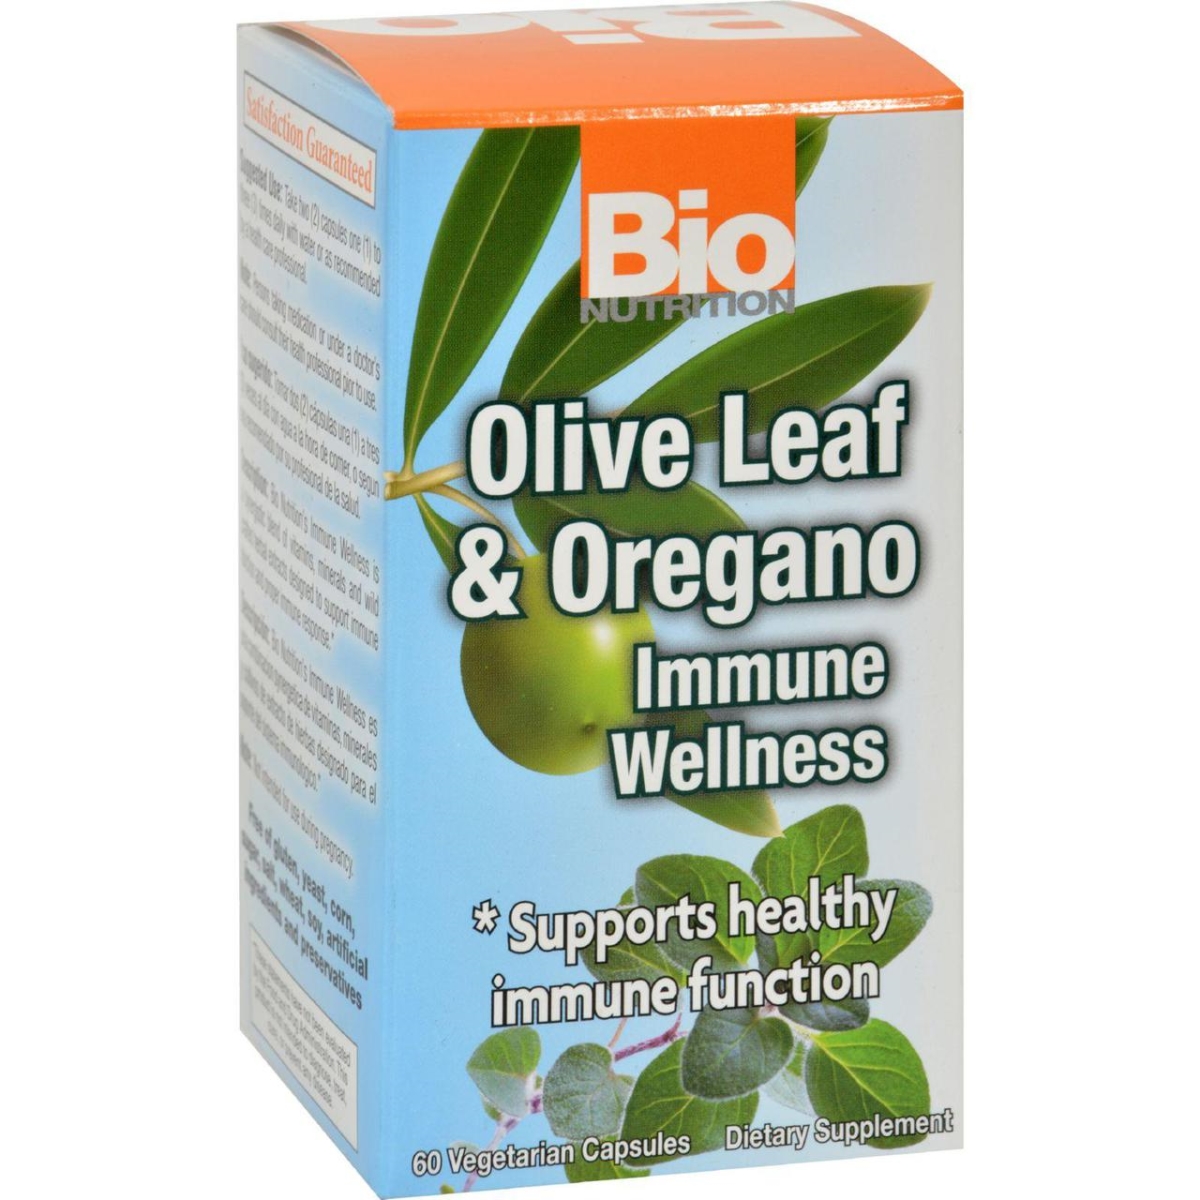 Bio Nutrition Hg1182849 Olive Leaf & Oregano Immune Wellness - 60 Vegetarian Capsules